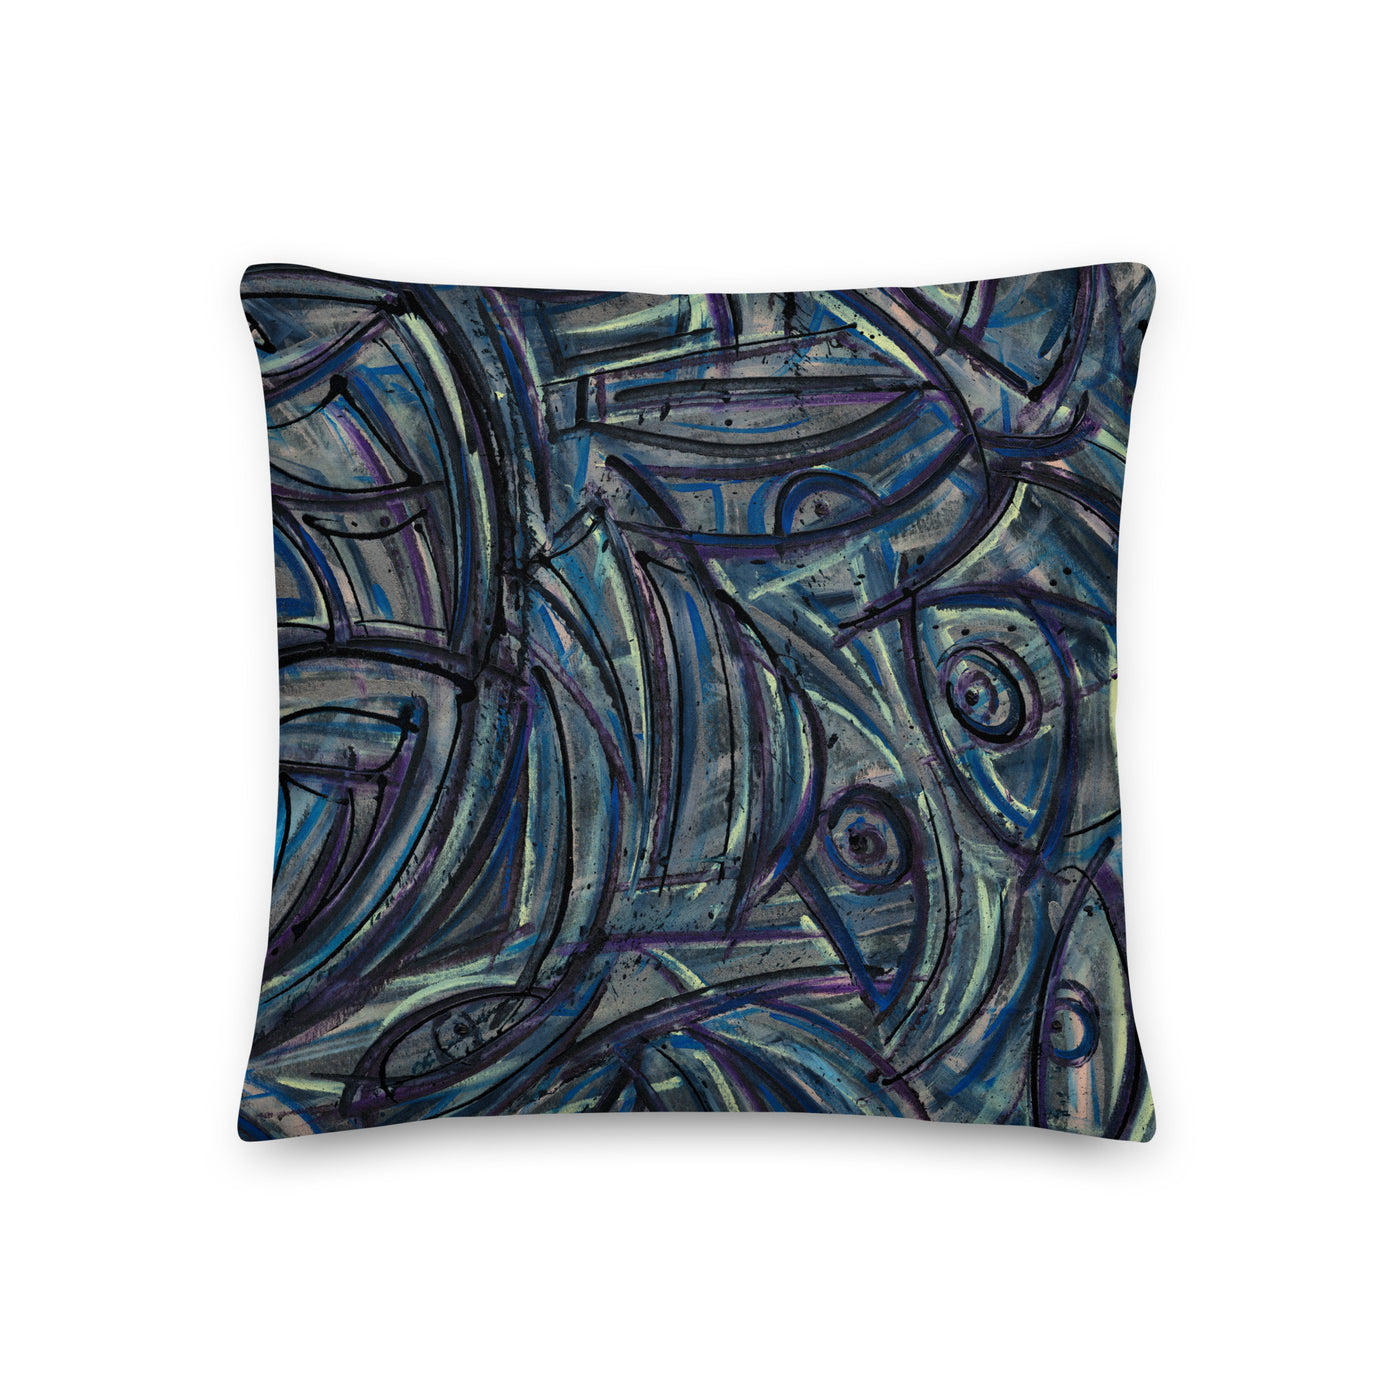 Insight Art Premium Pillow